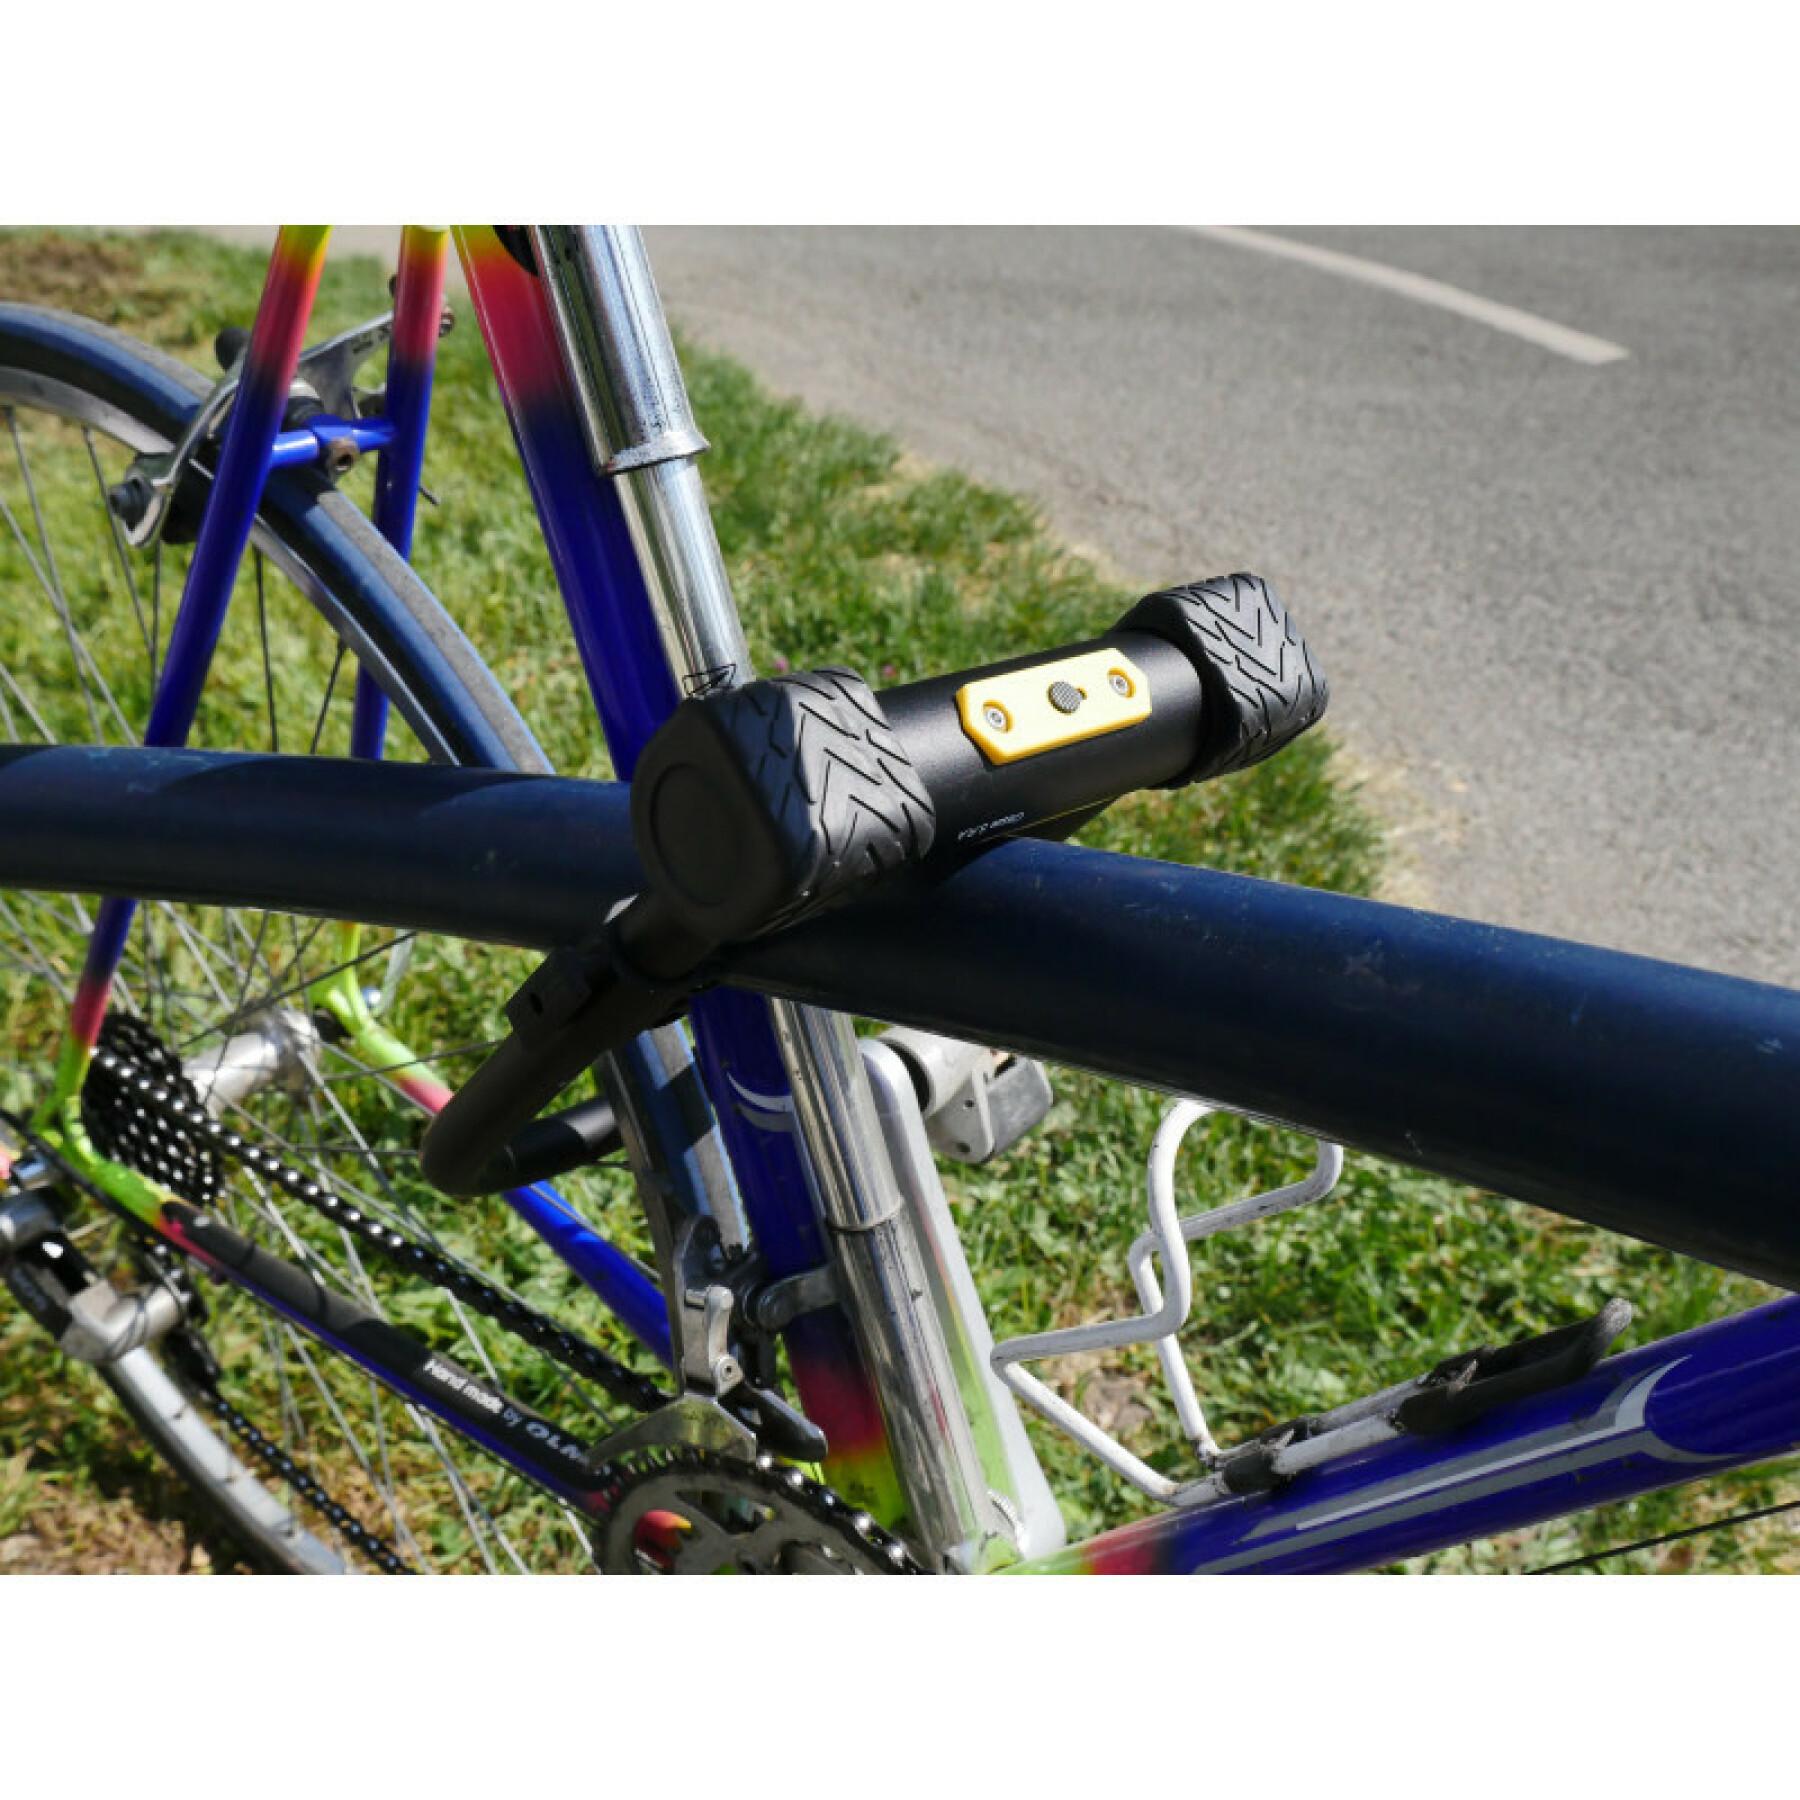 u sra anti-theft device with bike mount Michelin